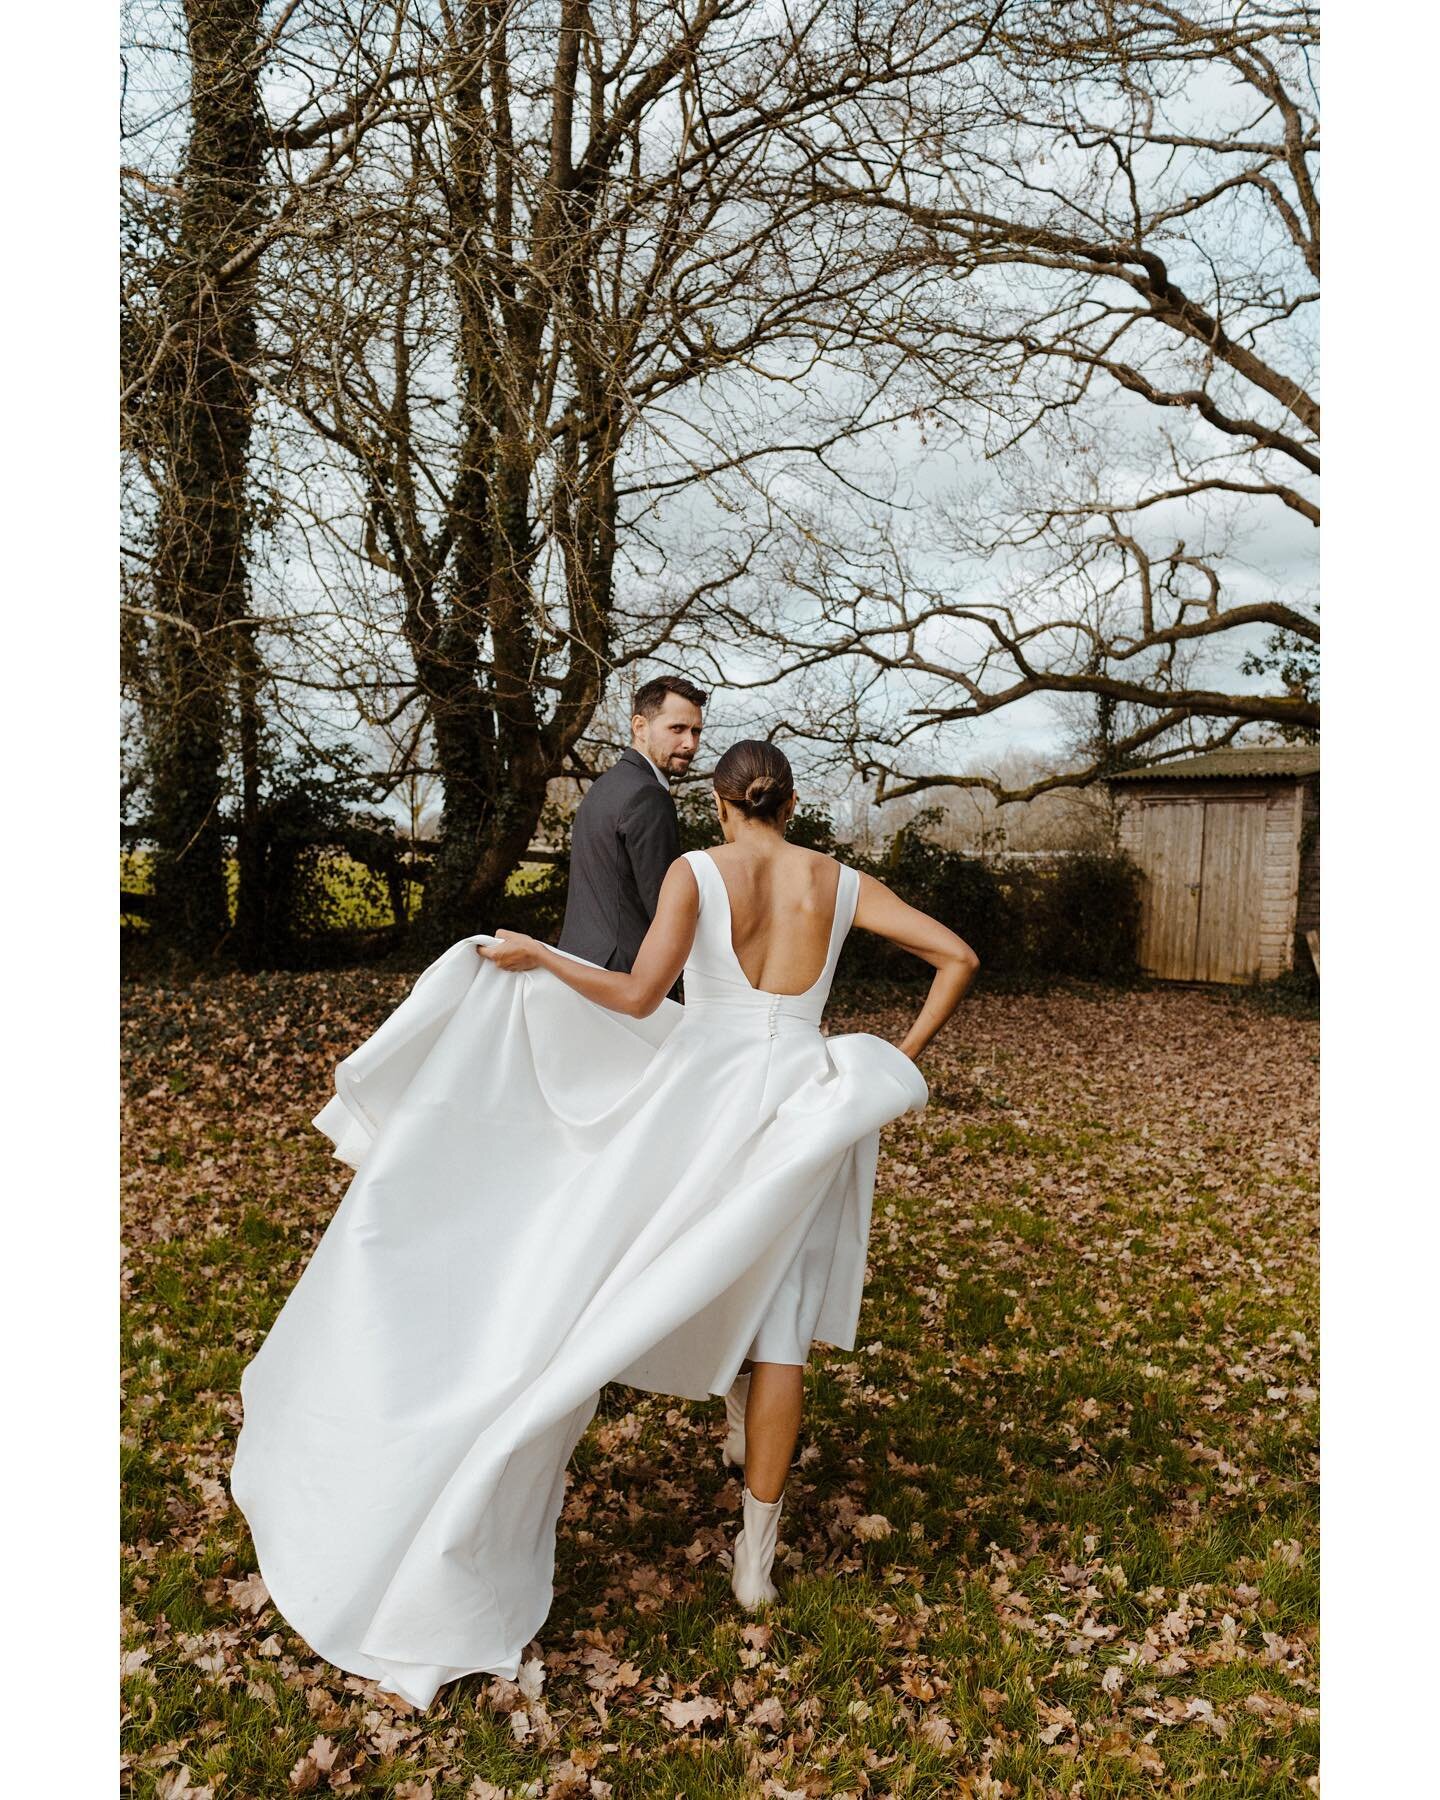 Tom &amp; Yaa your photos are incoming!
.
.
.
.
.
.
.

.
.
.
.
.

⠀⠀⠀⠀⠀⠀⠀⠀⠀
#brighton # #brightonweddingphotographer #london  #weddinginspiration #weddinginpso #brightontownhall  #brightontownhallwedding  #robbinsphotographic #love 
#weddingdress #we